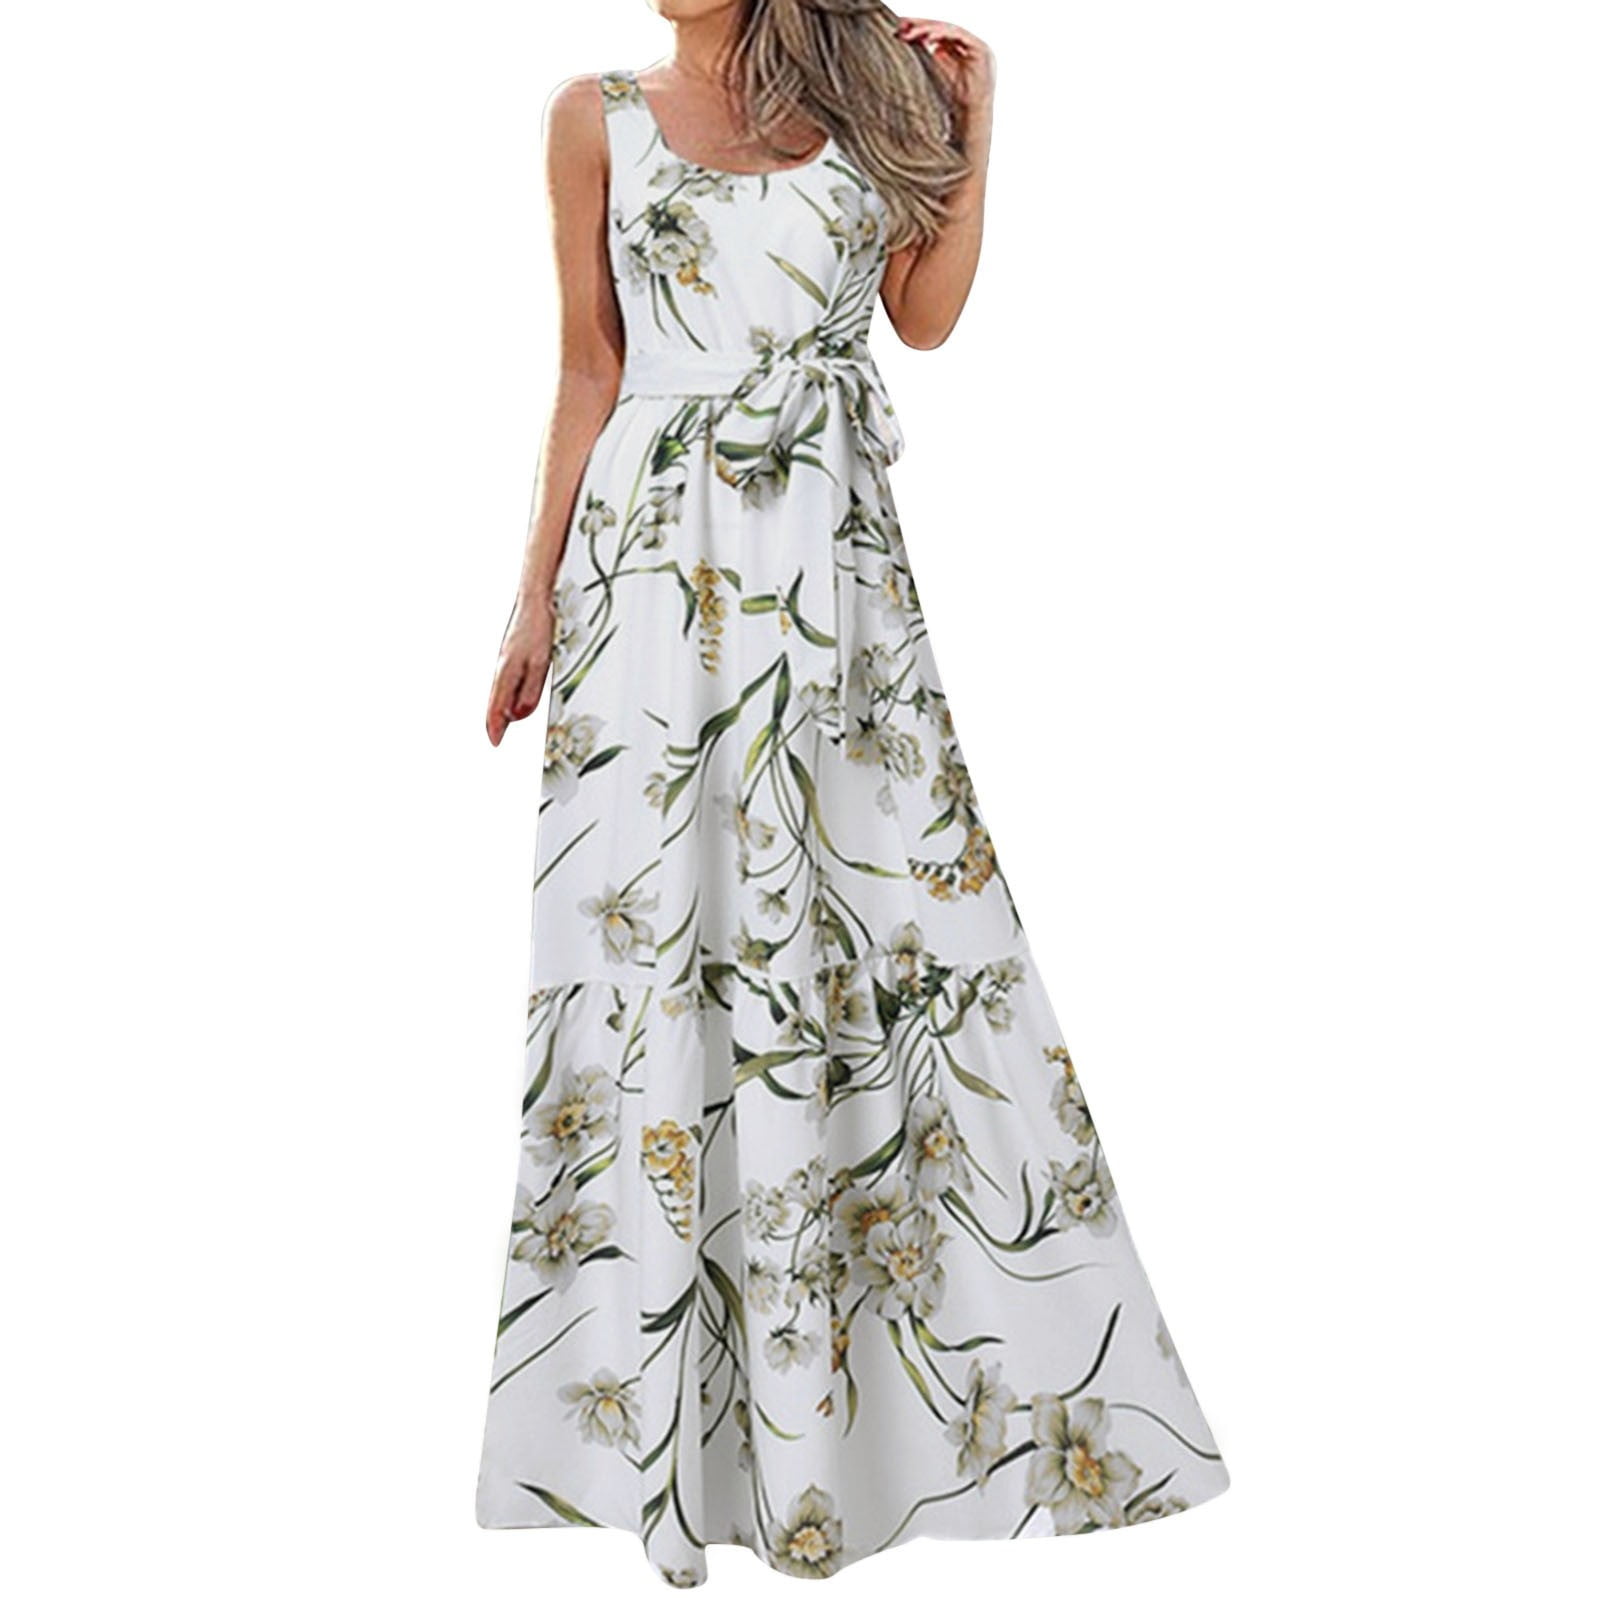 mveomtd Summer Dresses For Women With Floral Print Sleeveless Long ...